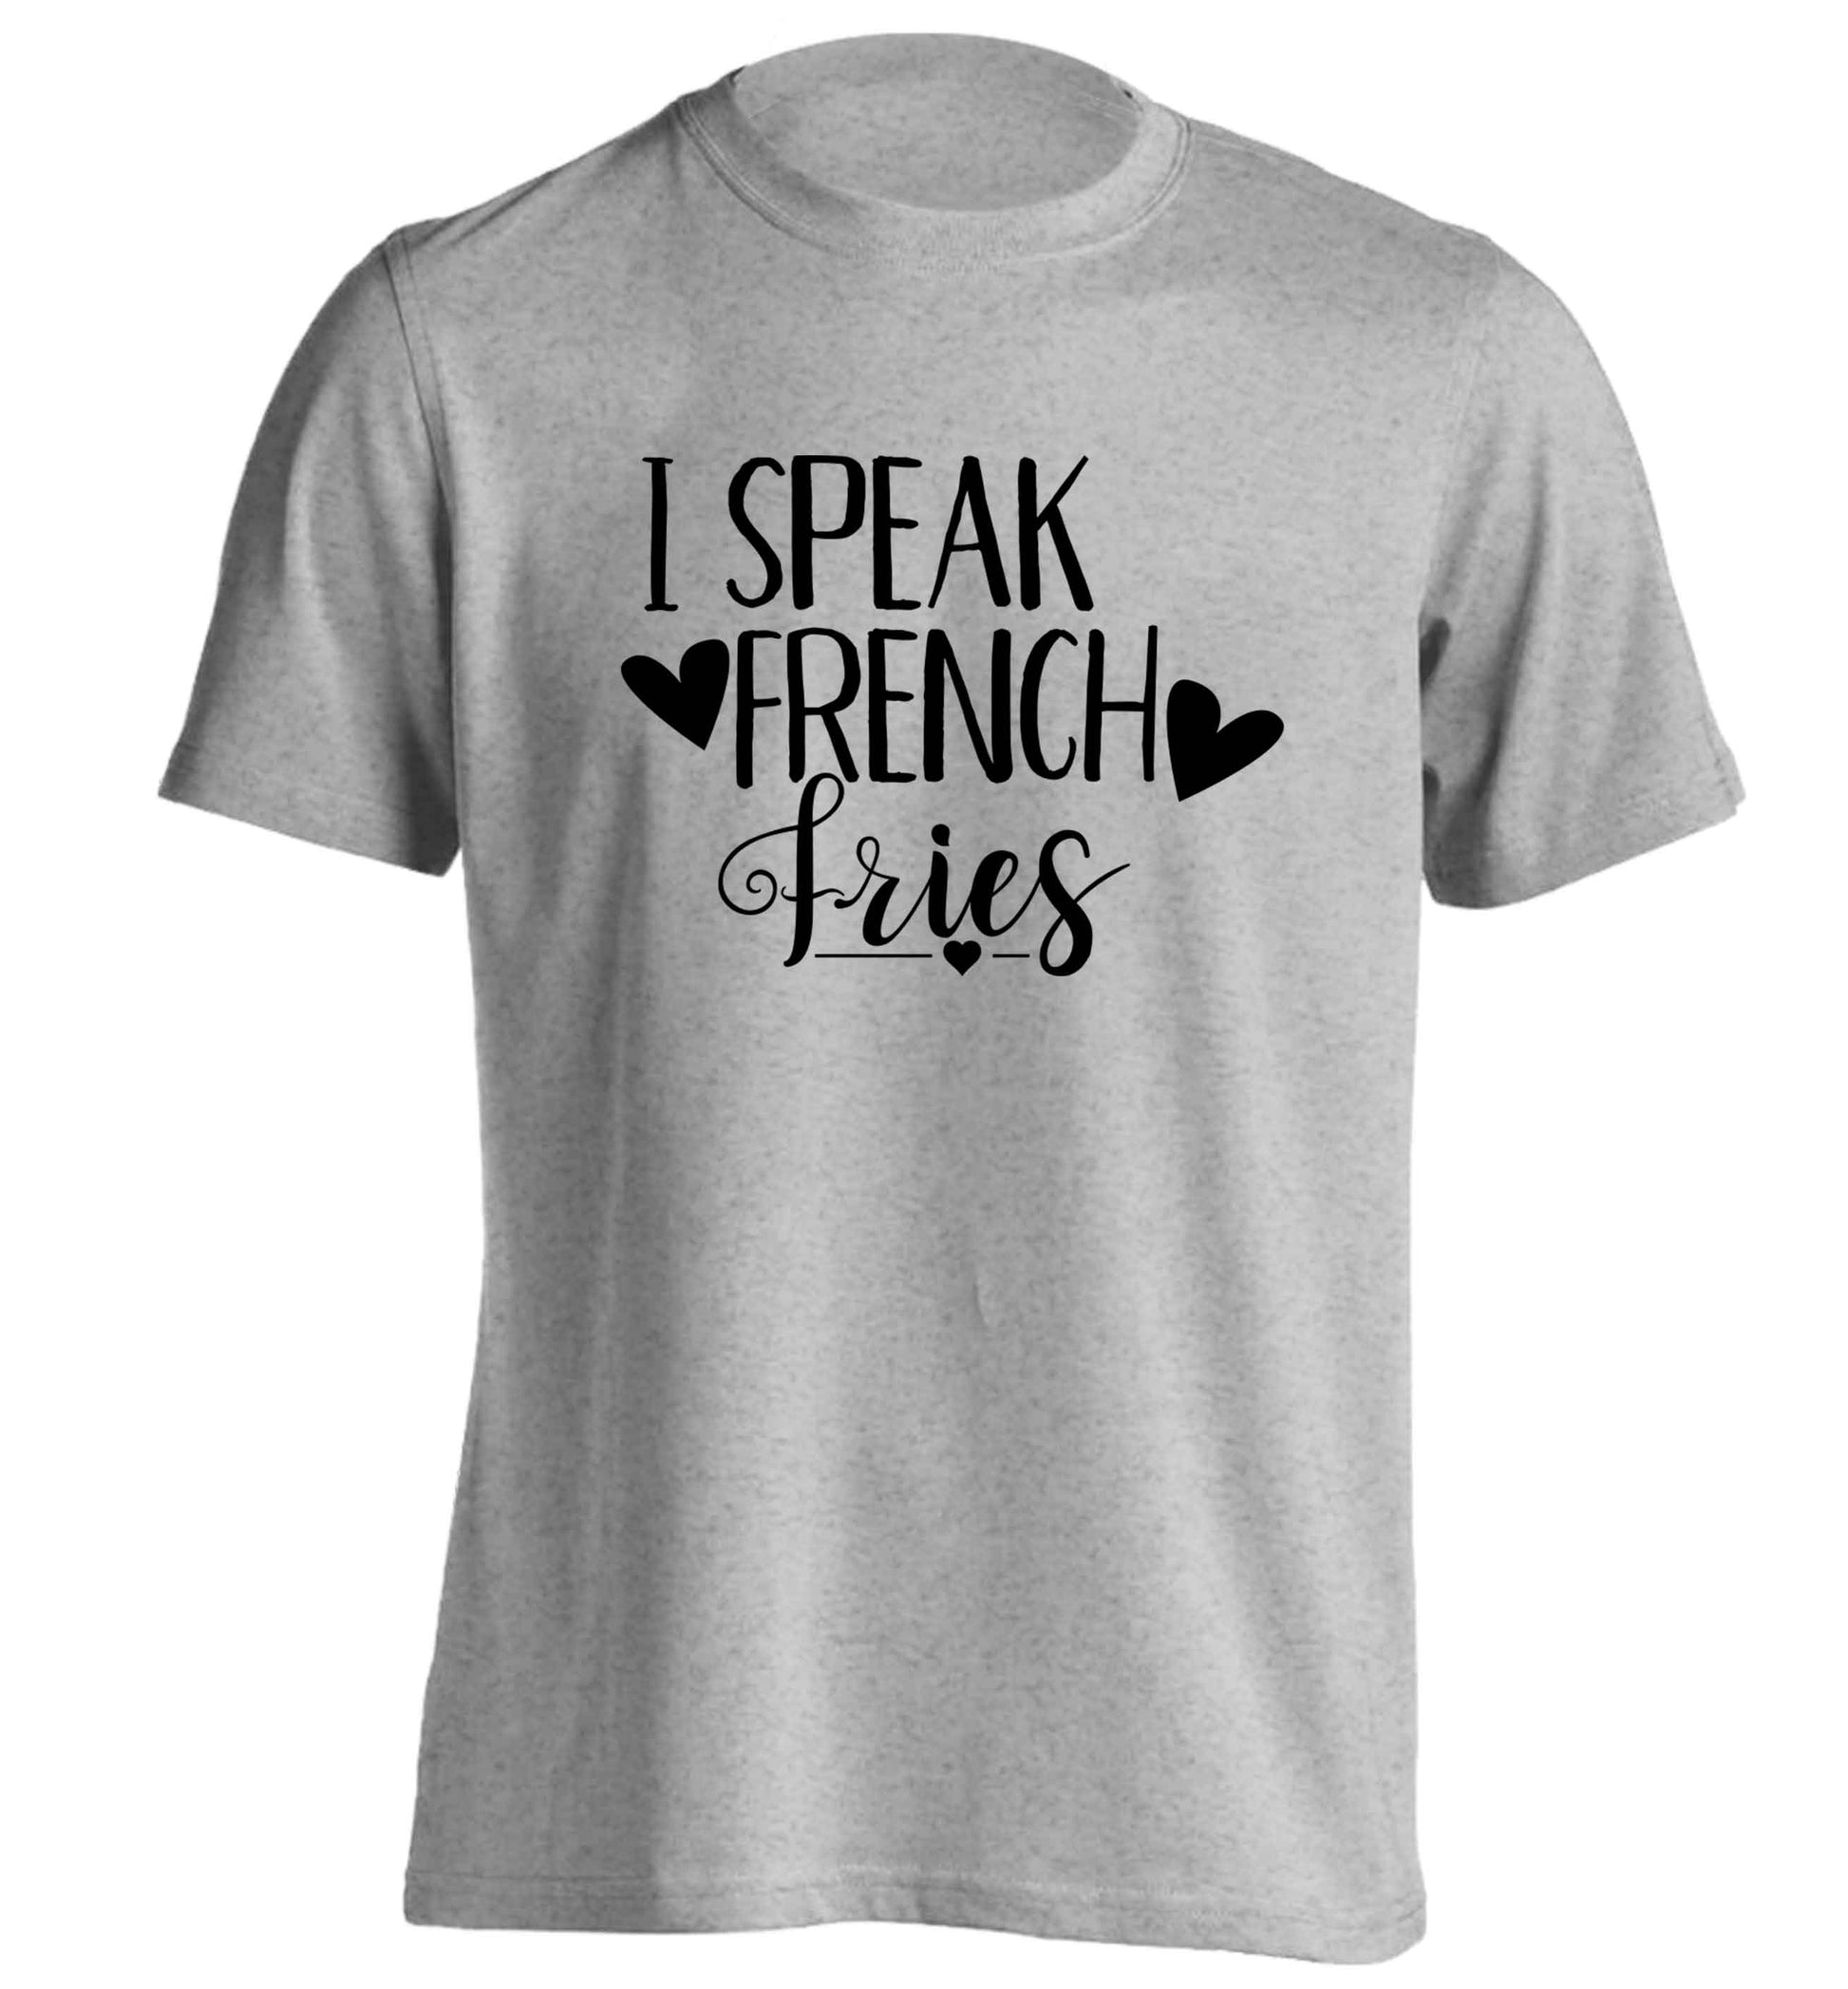 I speak French fries adults unisex grey Tshirt 2XL